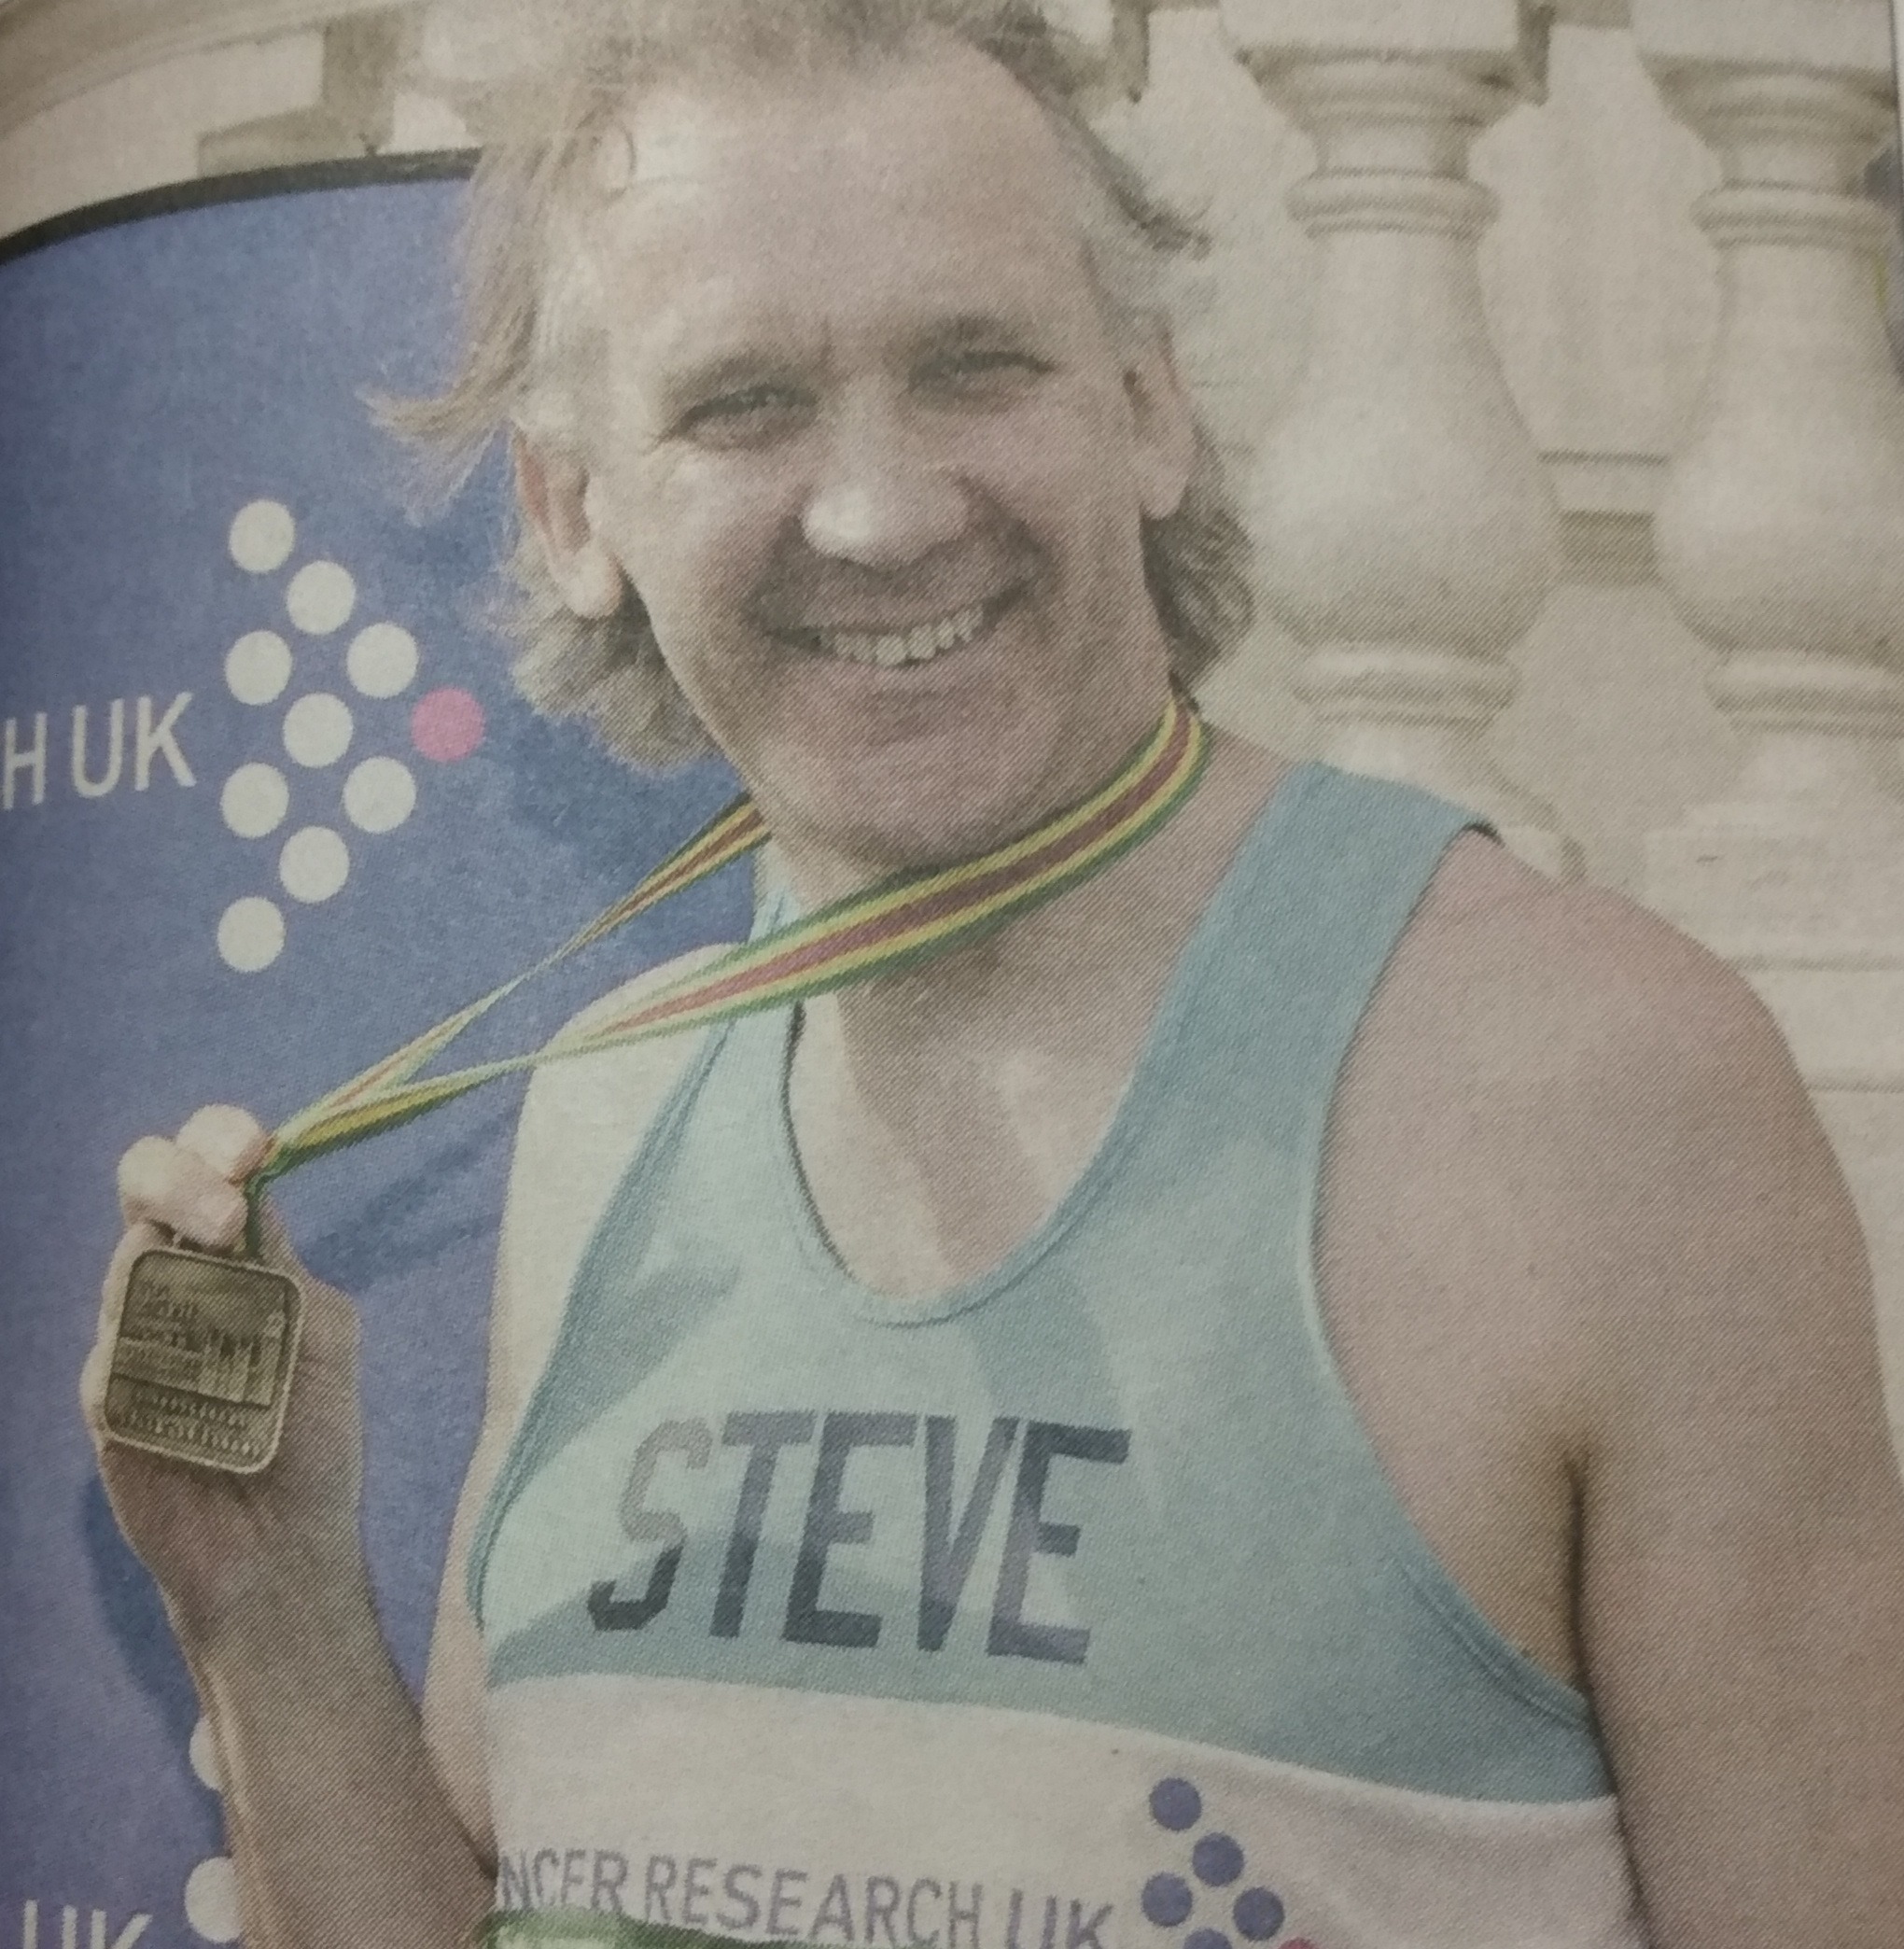 Steve Richardson of Wokingham also ran in the marathon